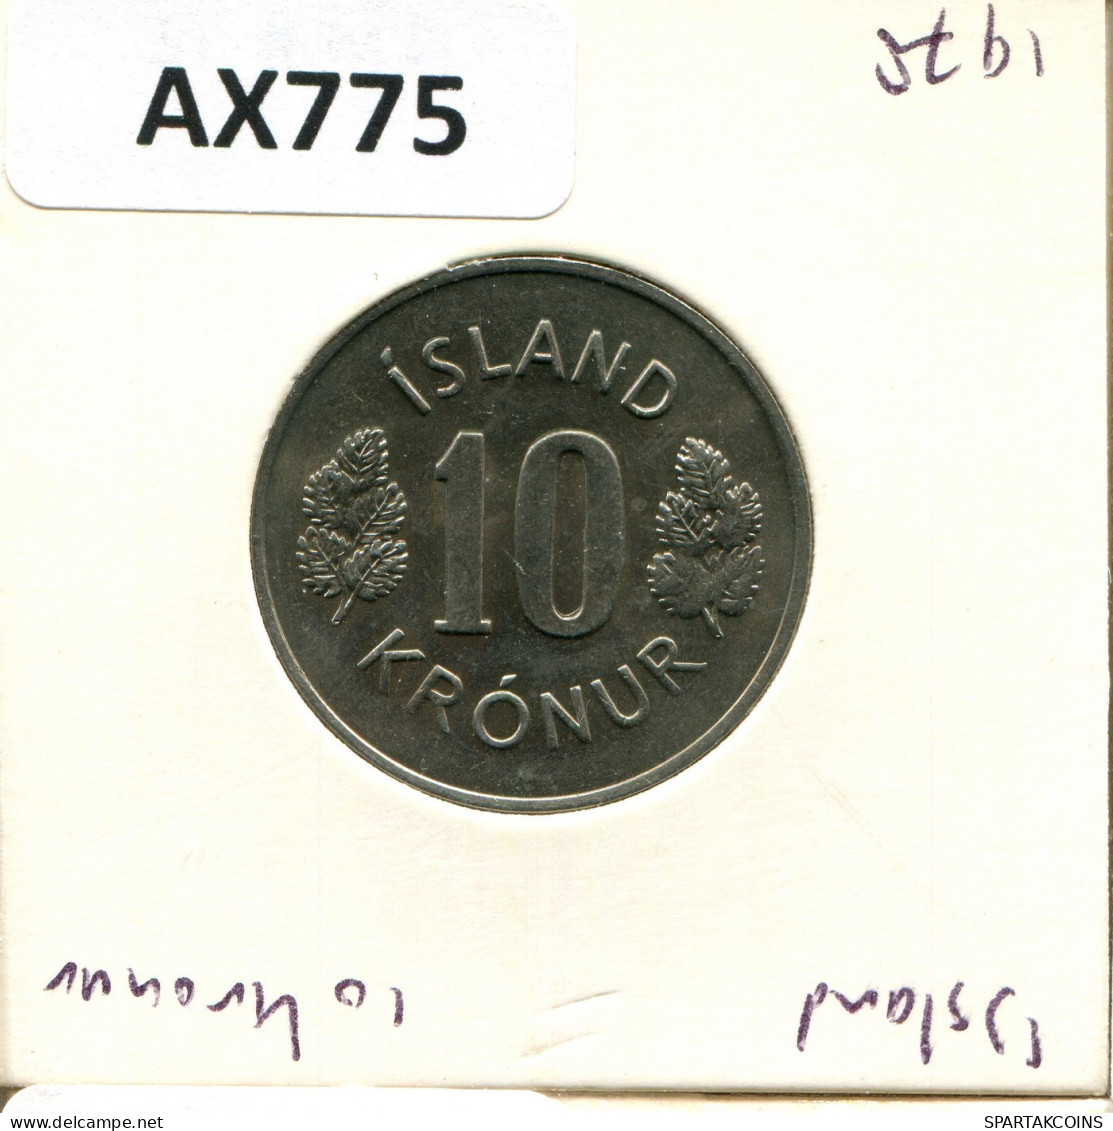 10 KRONUR 1978 ISLANDIA ICELAND Moneda #AX775.E.A - Islandia